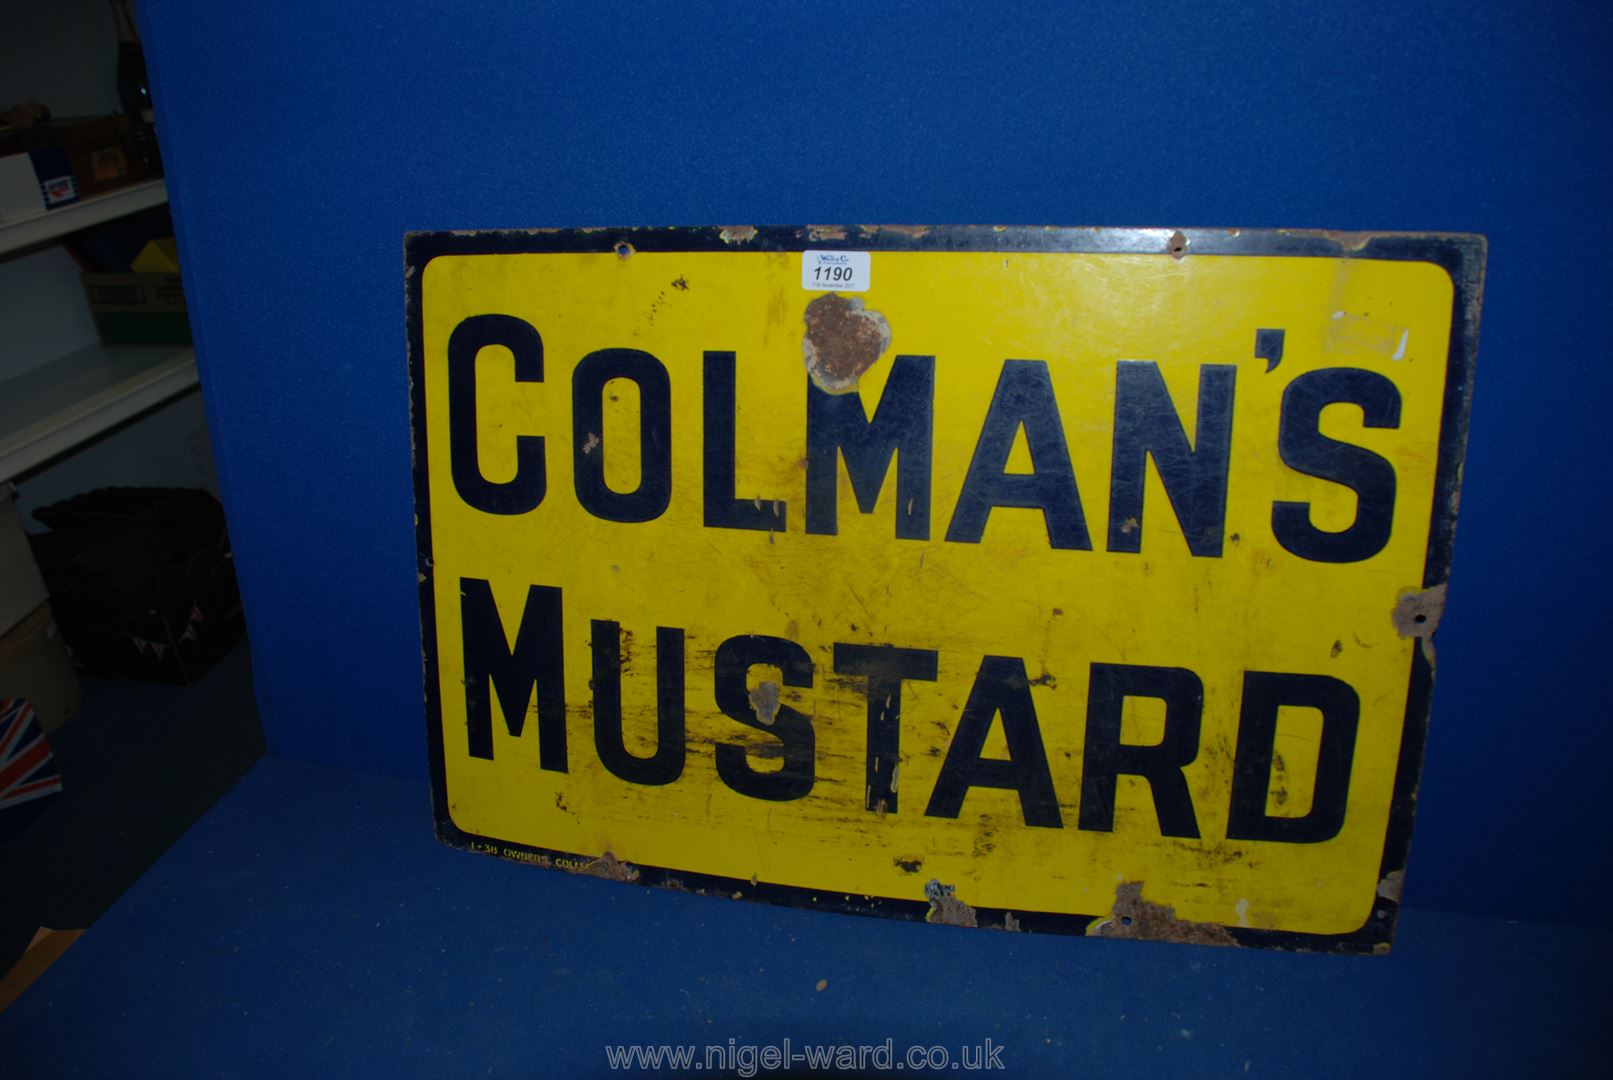 A Colman's Mustard Advertising Sign, 24" x 16".